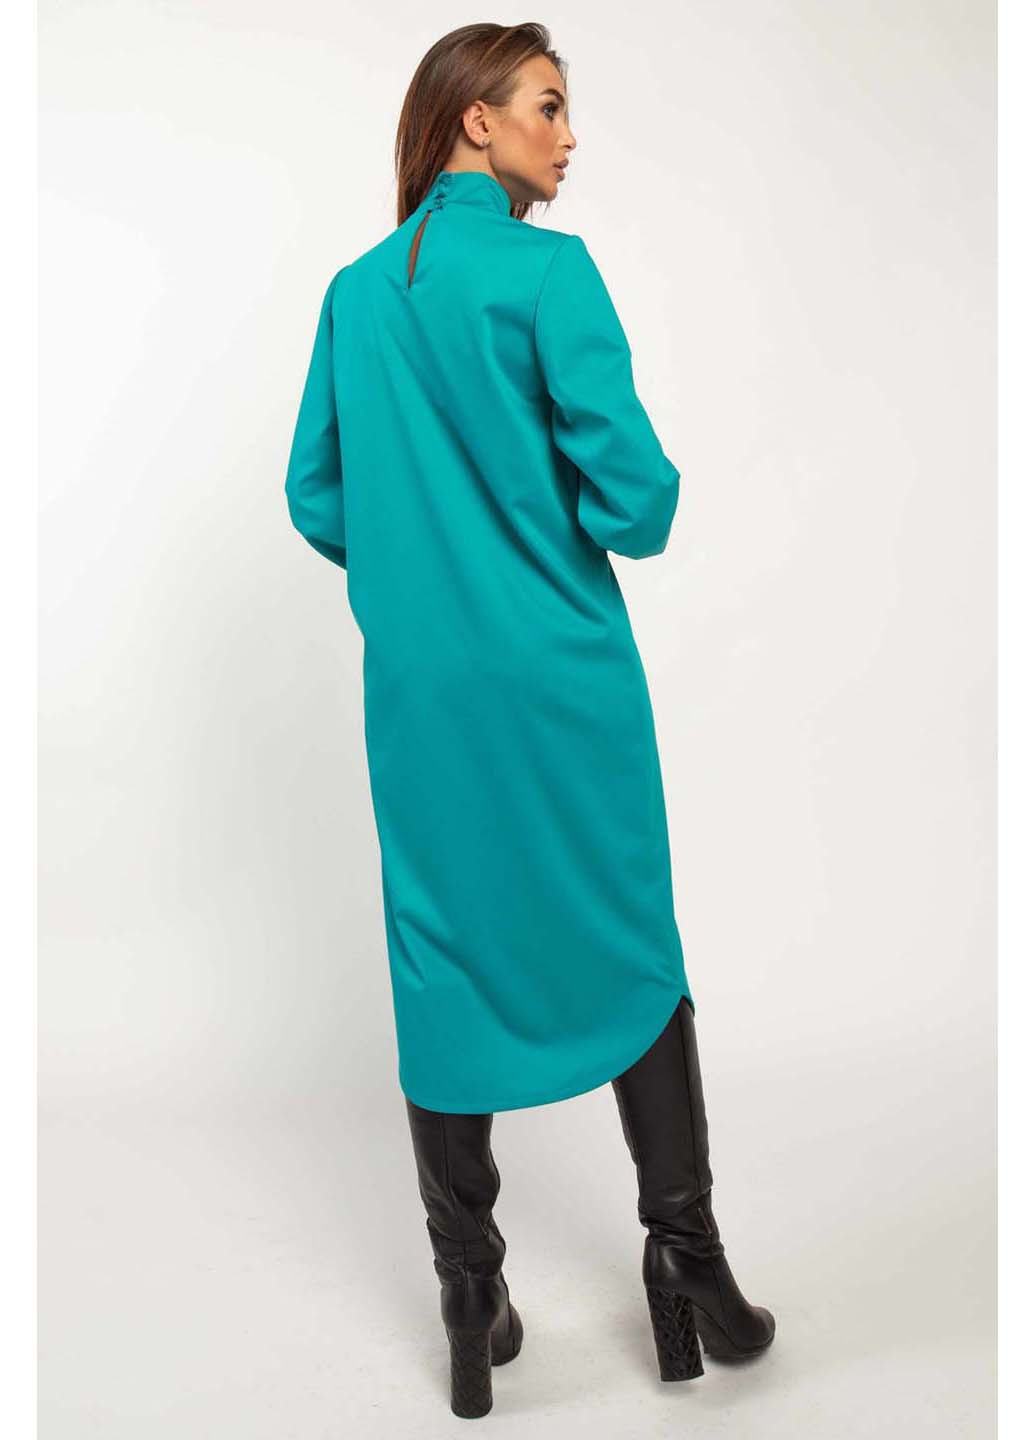 Голубое кэжуал платье Ри Мари